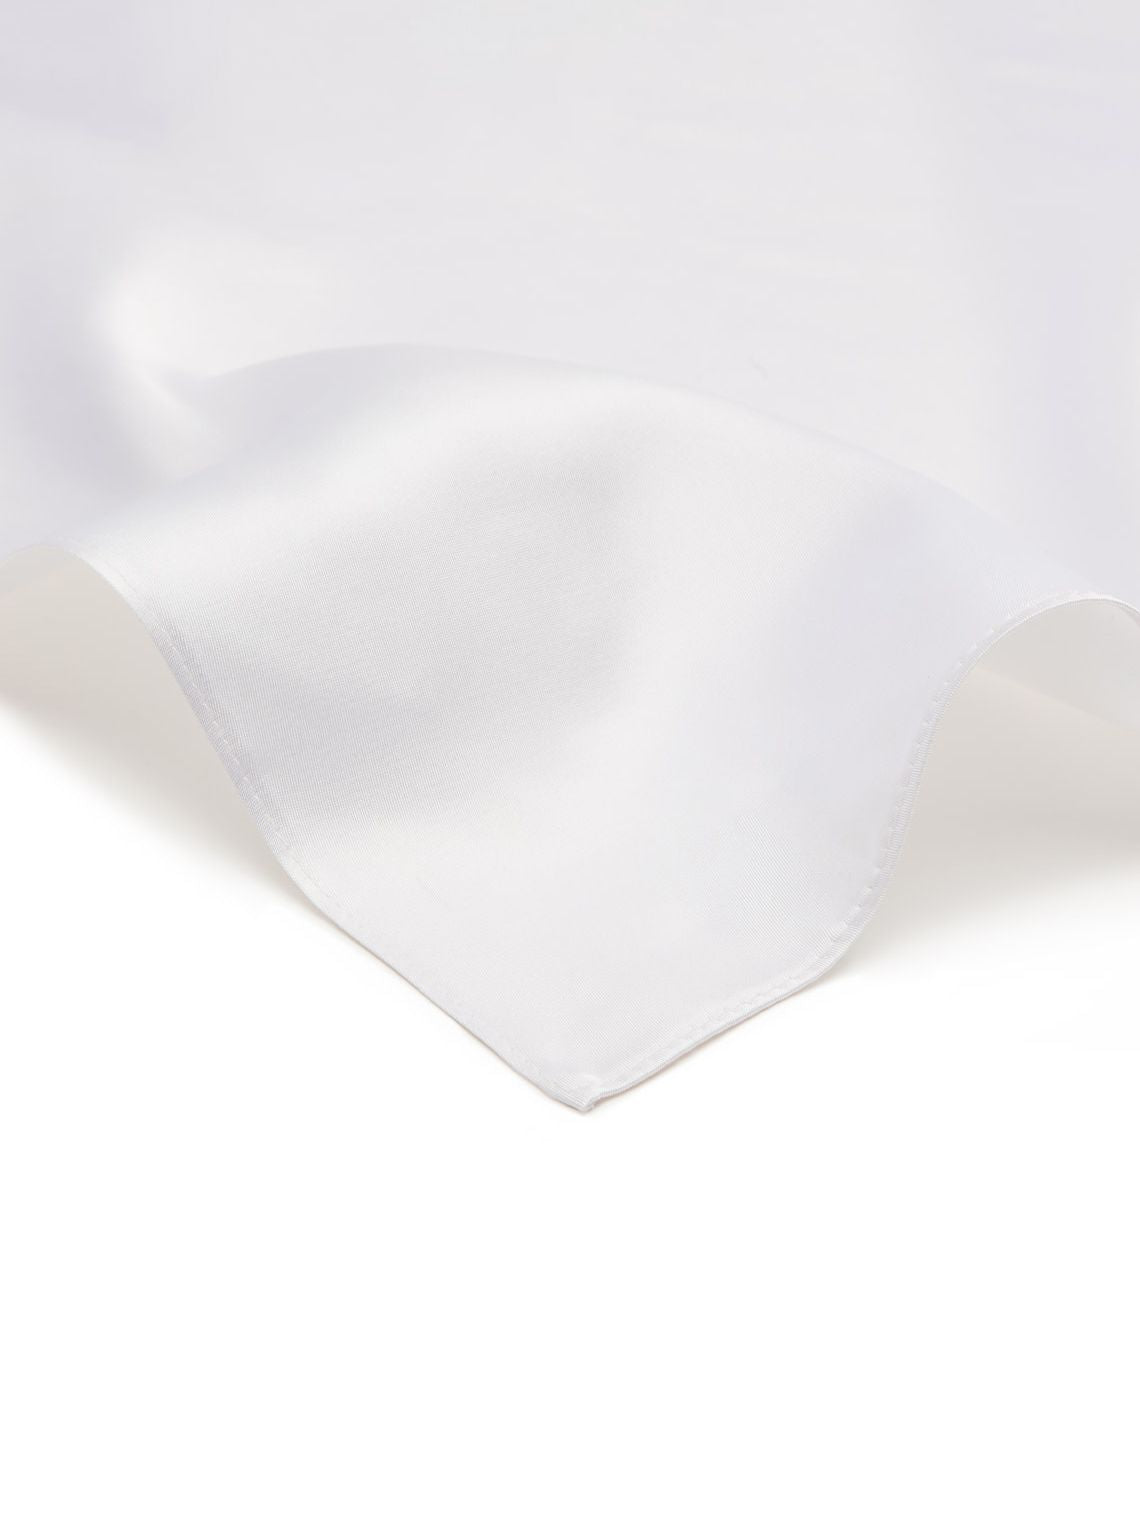 Silk Twill Handkerchiefs, Plain White